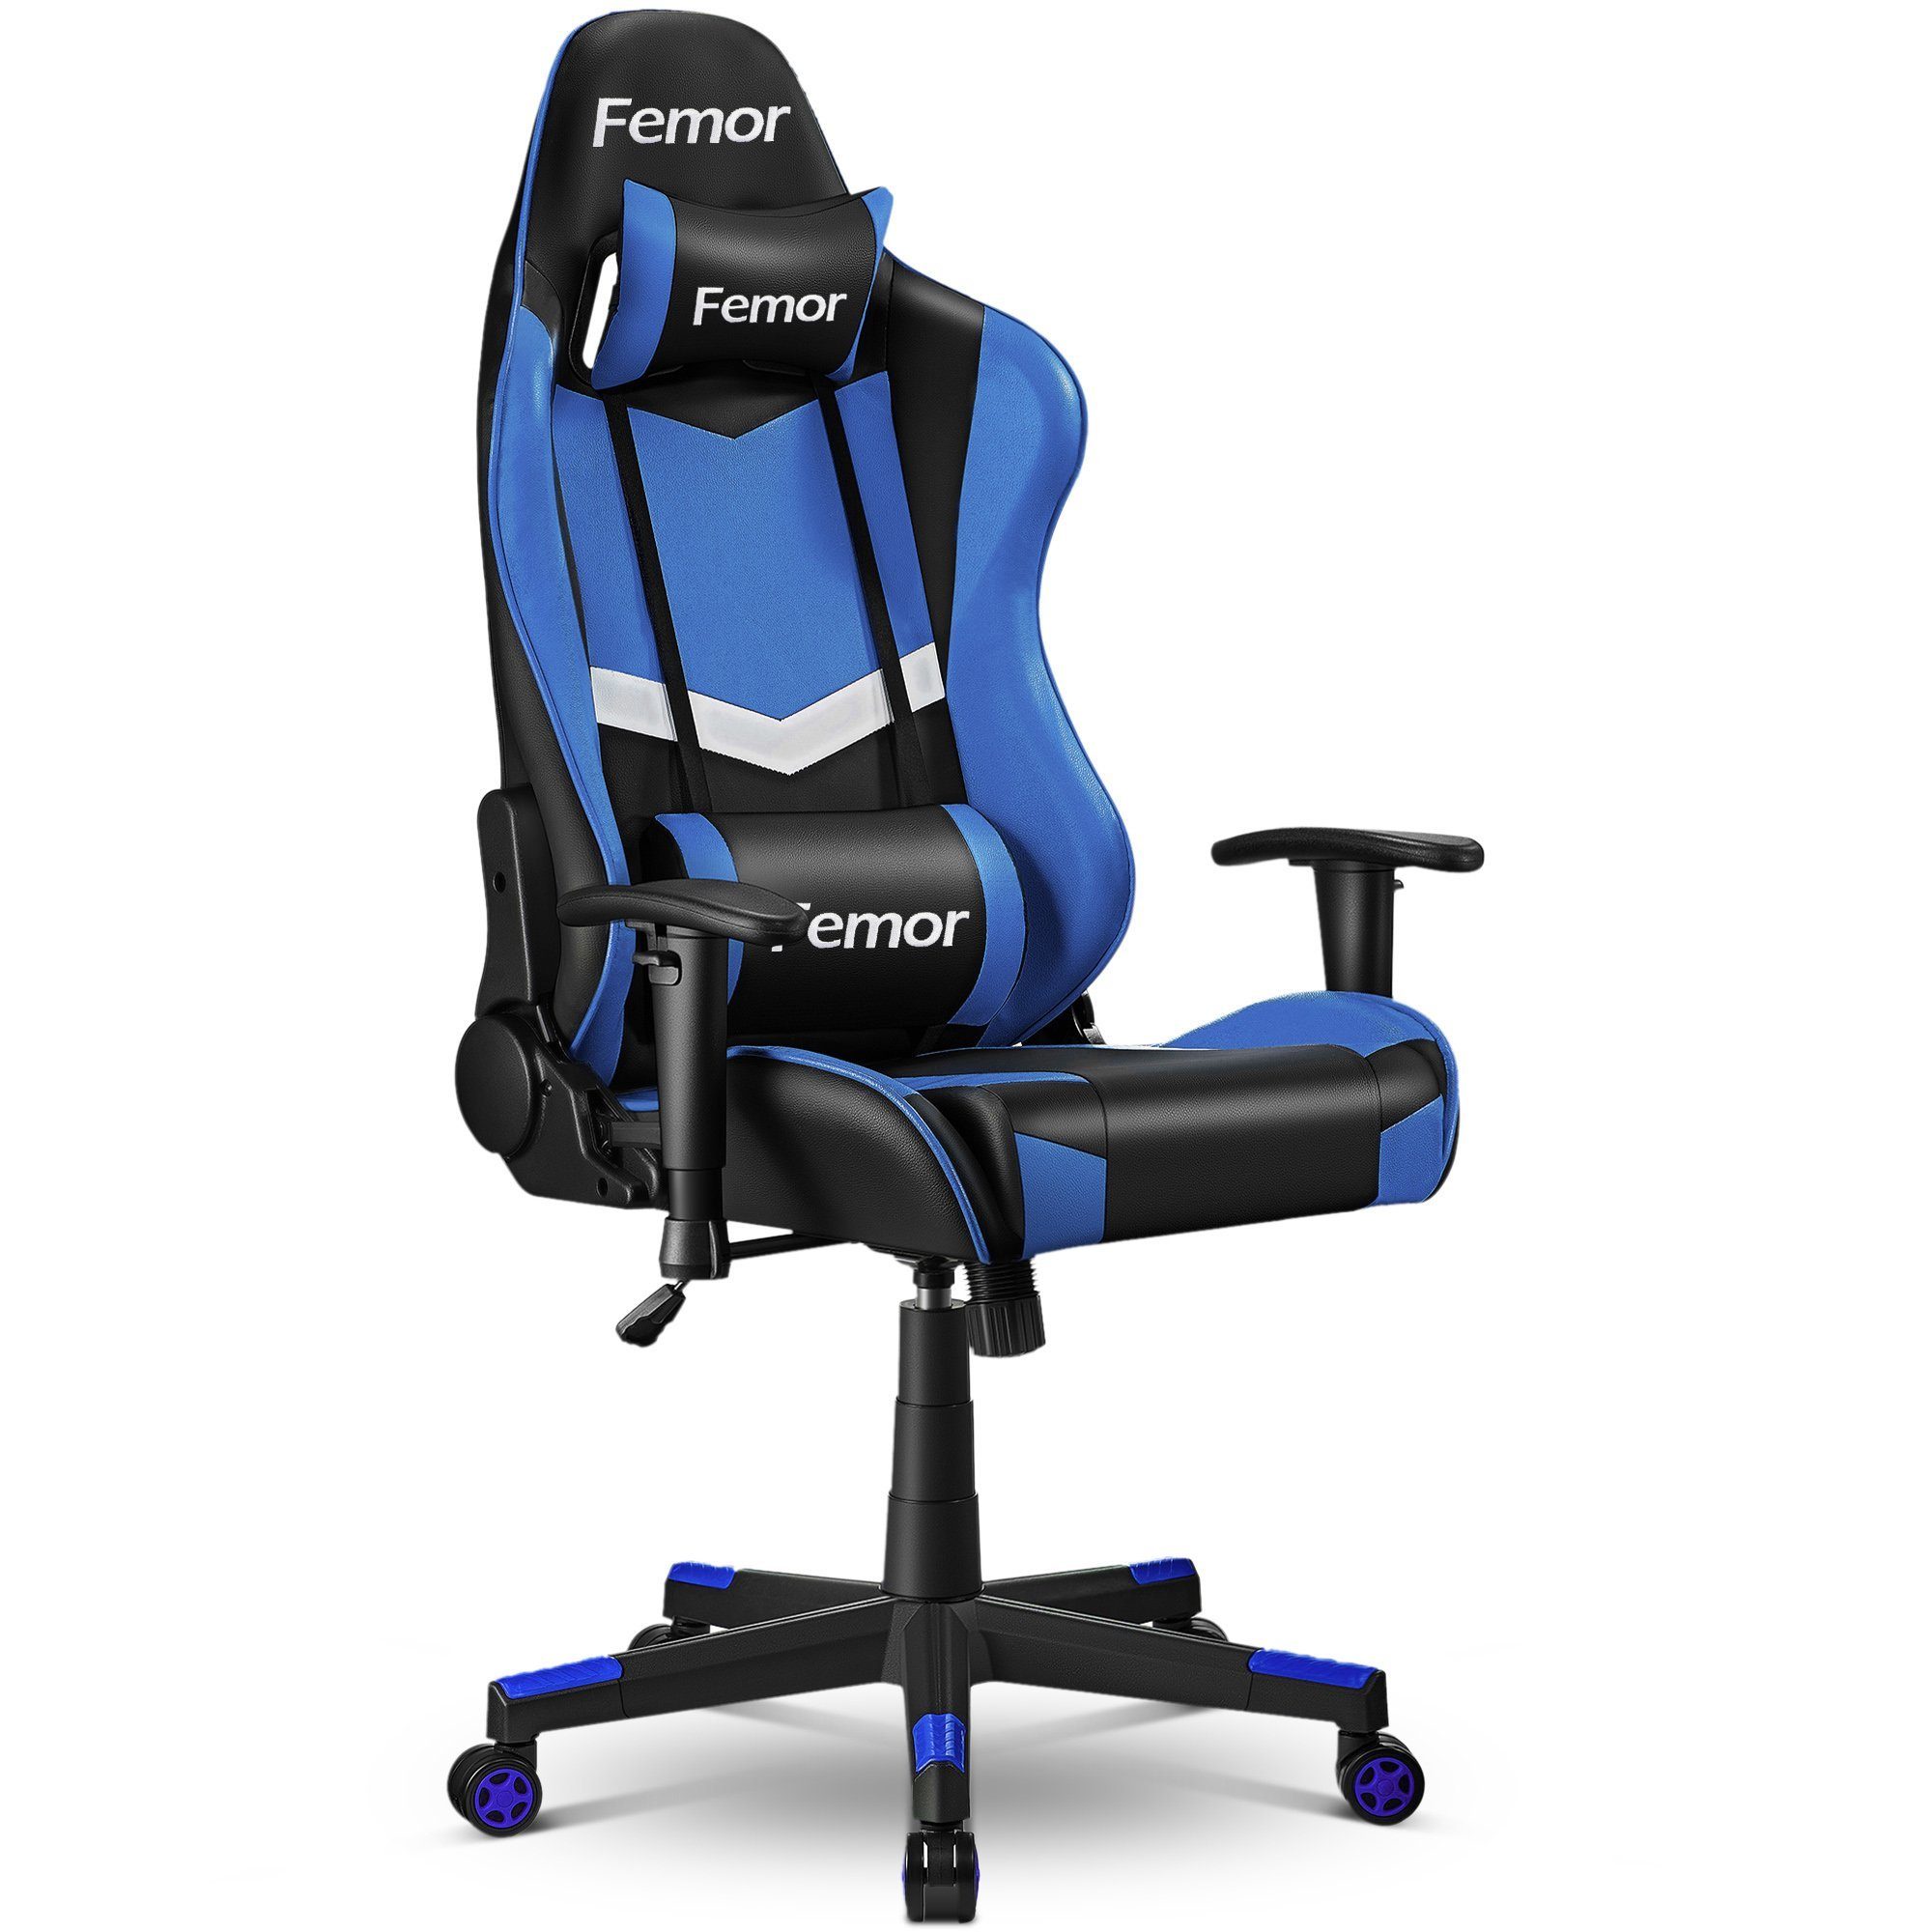 Femor blau Chair 90°-160° Stuhl Gaming Gaming Gamer Neigungswinkel Stuhl,